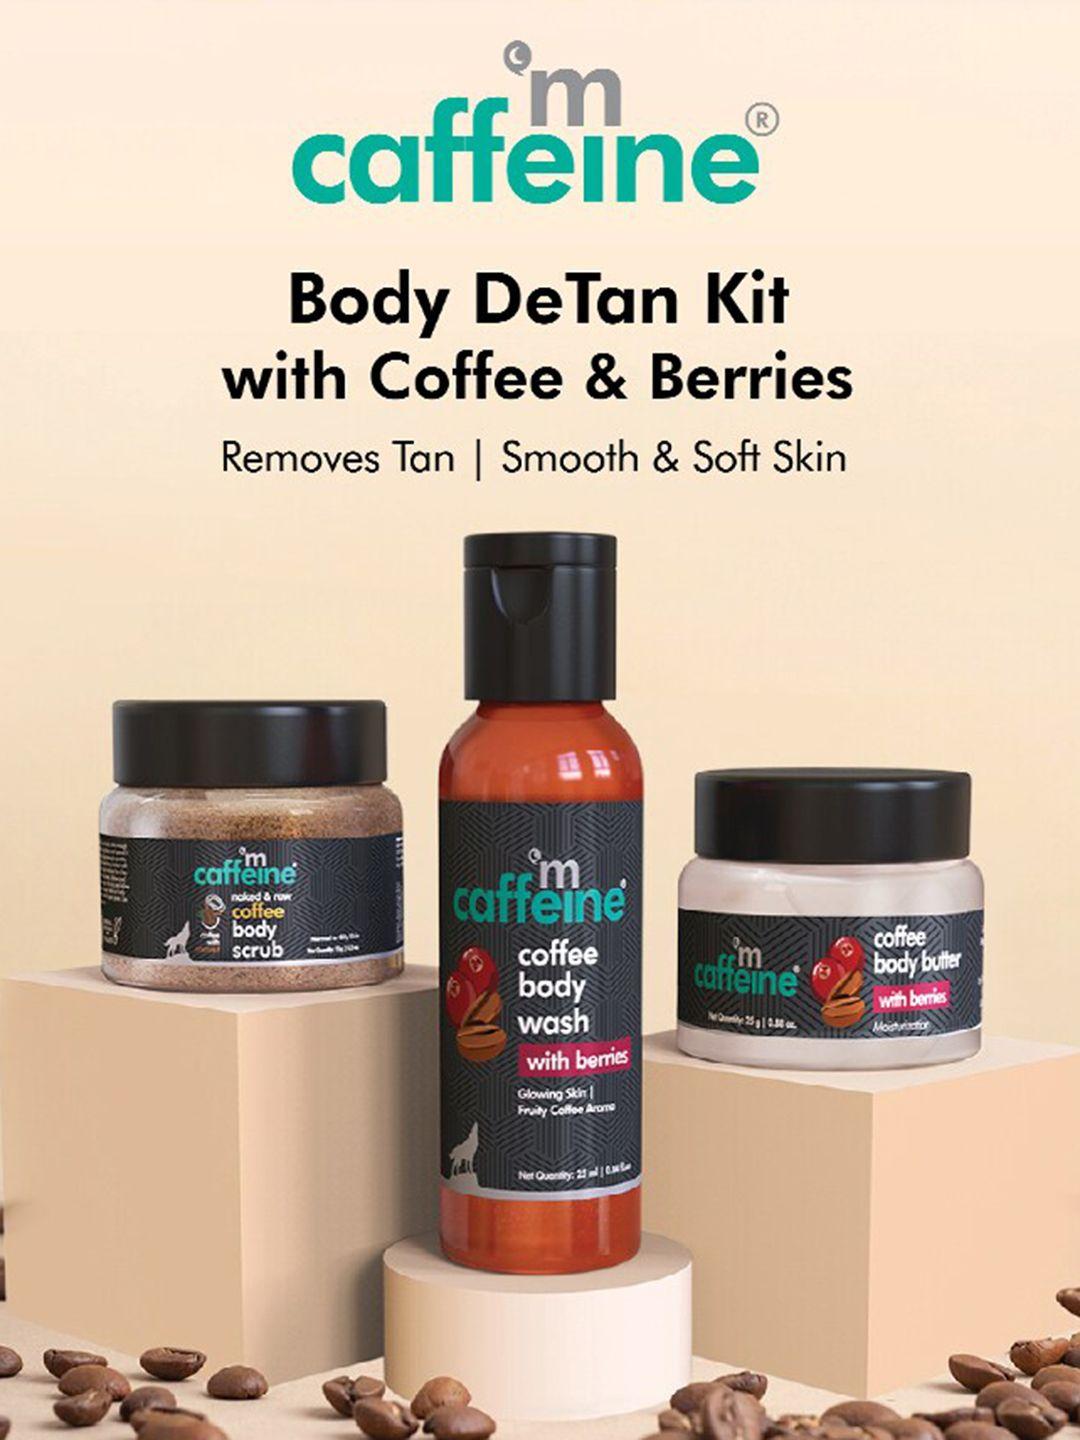 mcaffeine miniature coffee body de-tan kit with berries